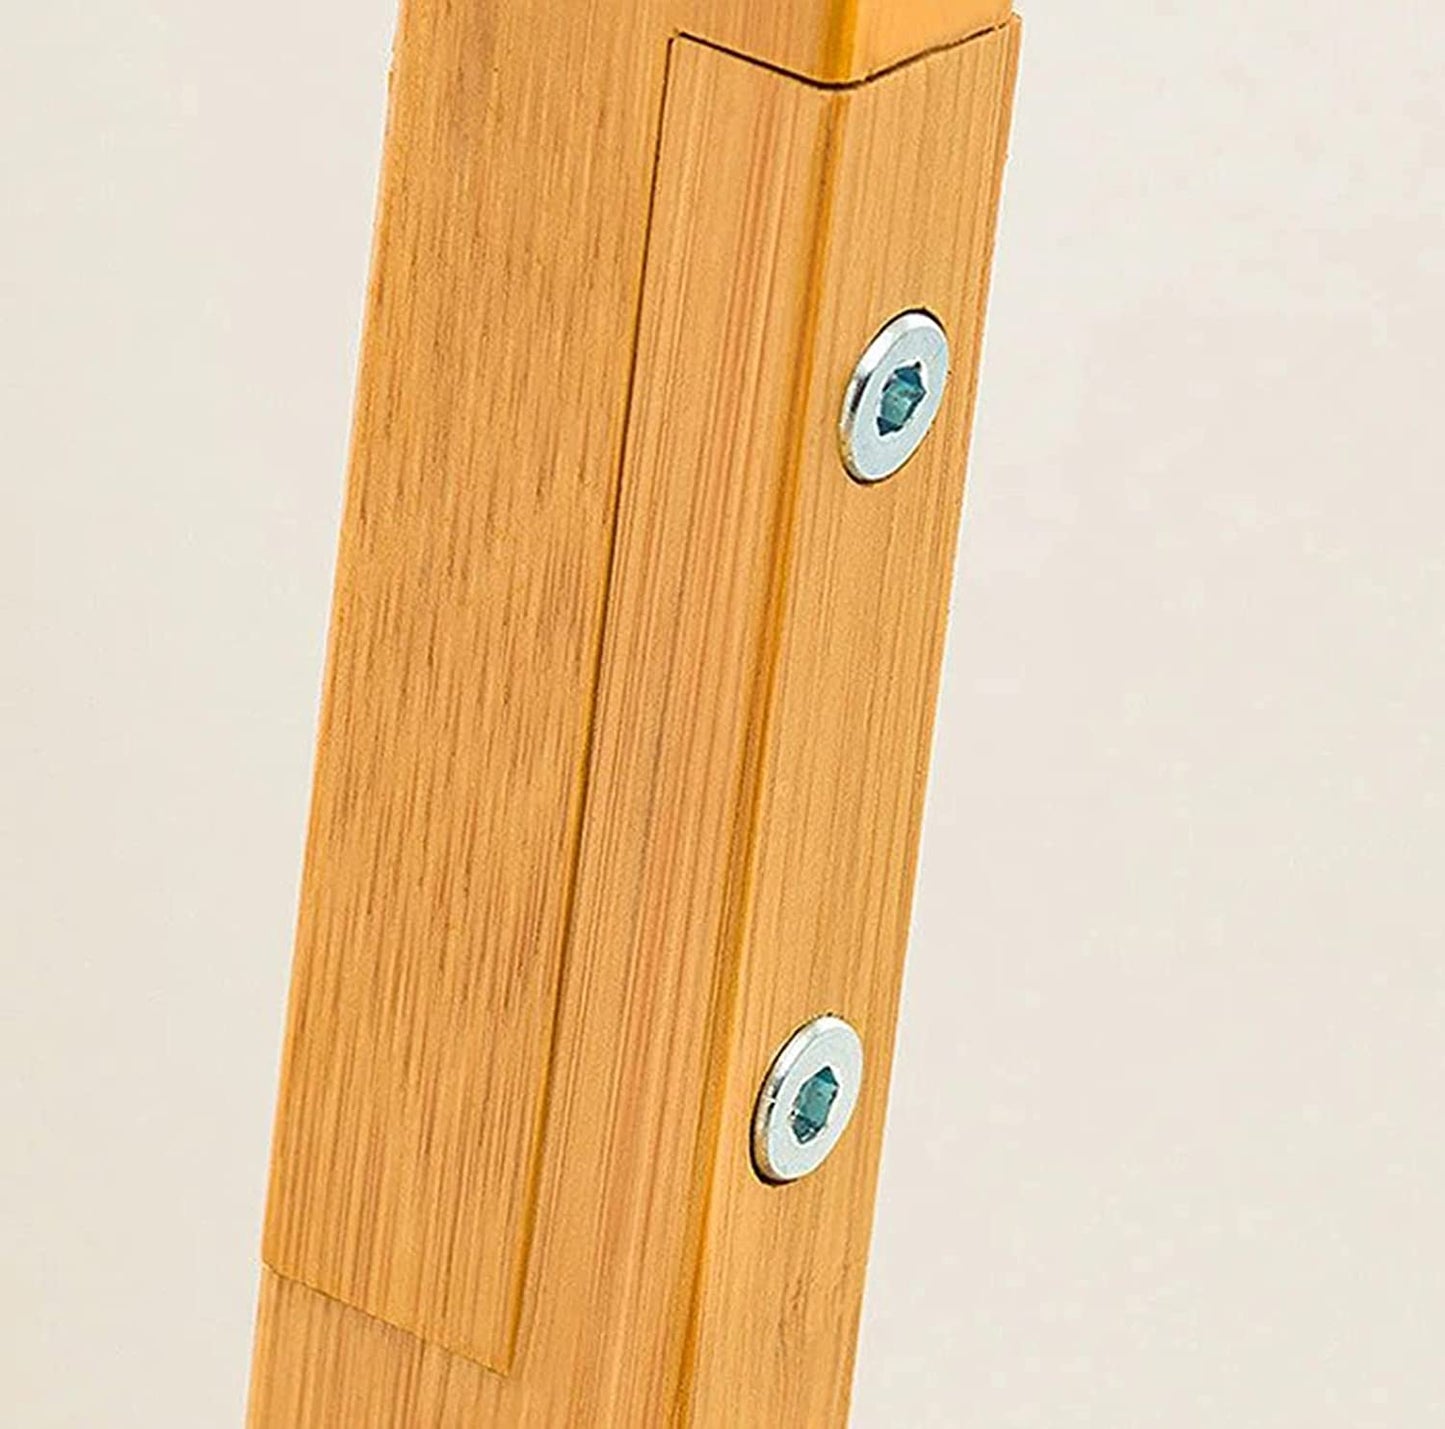 3 in 1 Wooden Hanging Clothes Rail, DIY Garment Rack - (60 x 45 x 165cm)